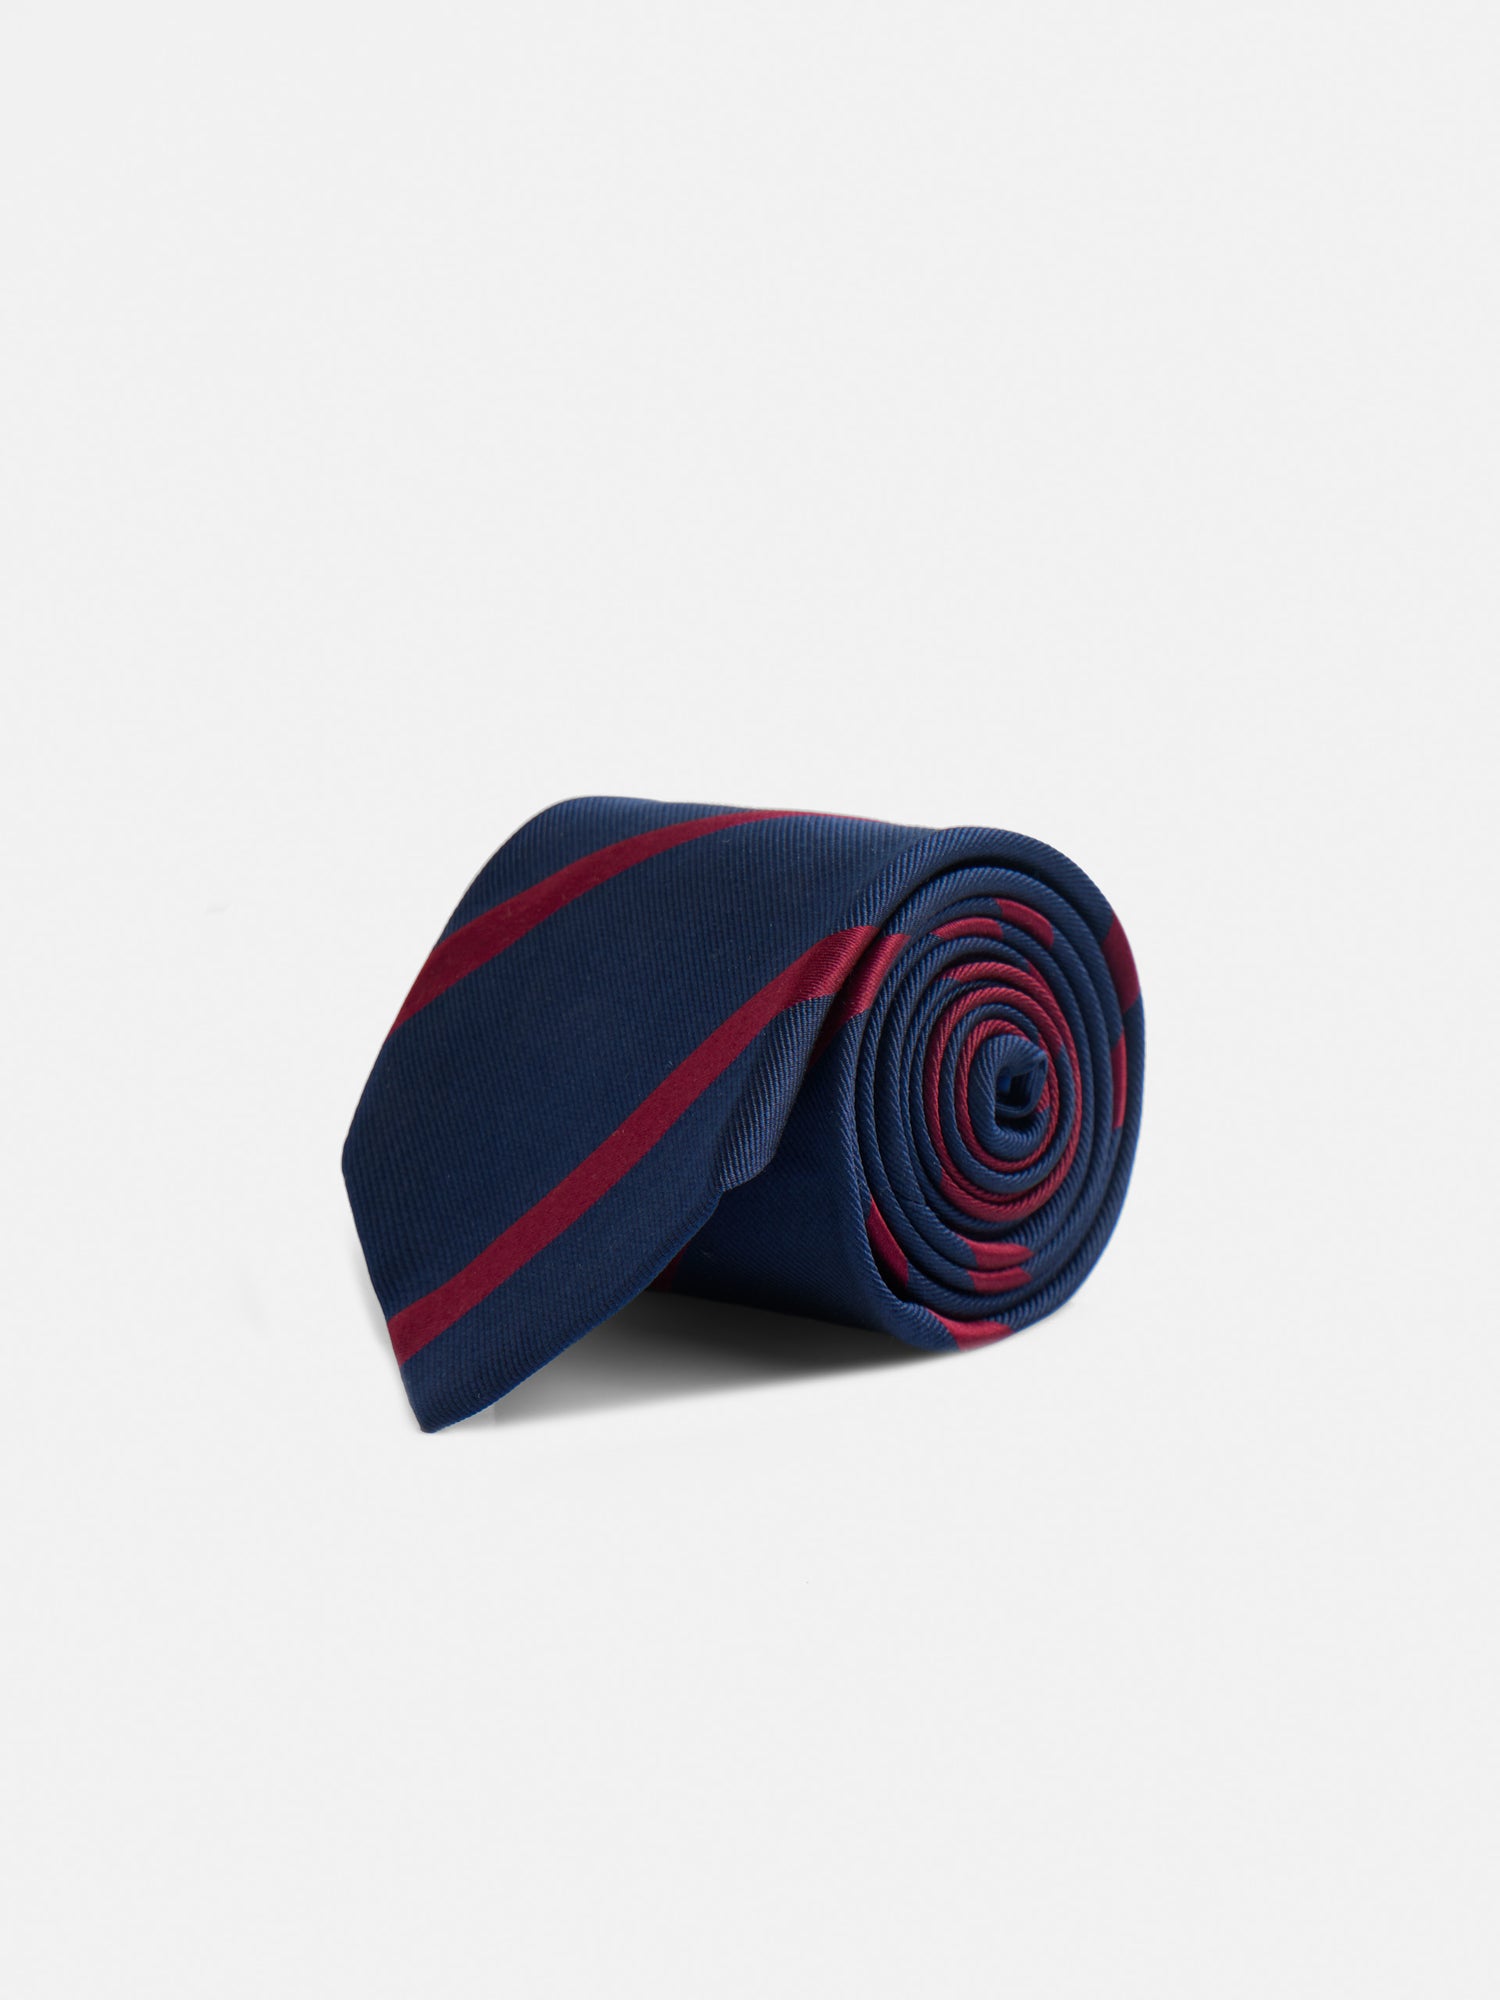 Cravate marine rayée bordeaux